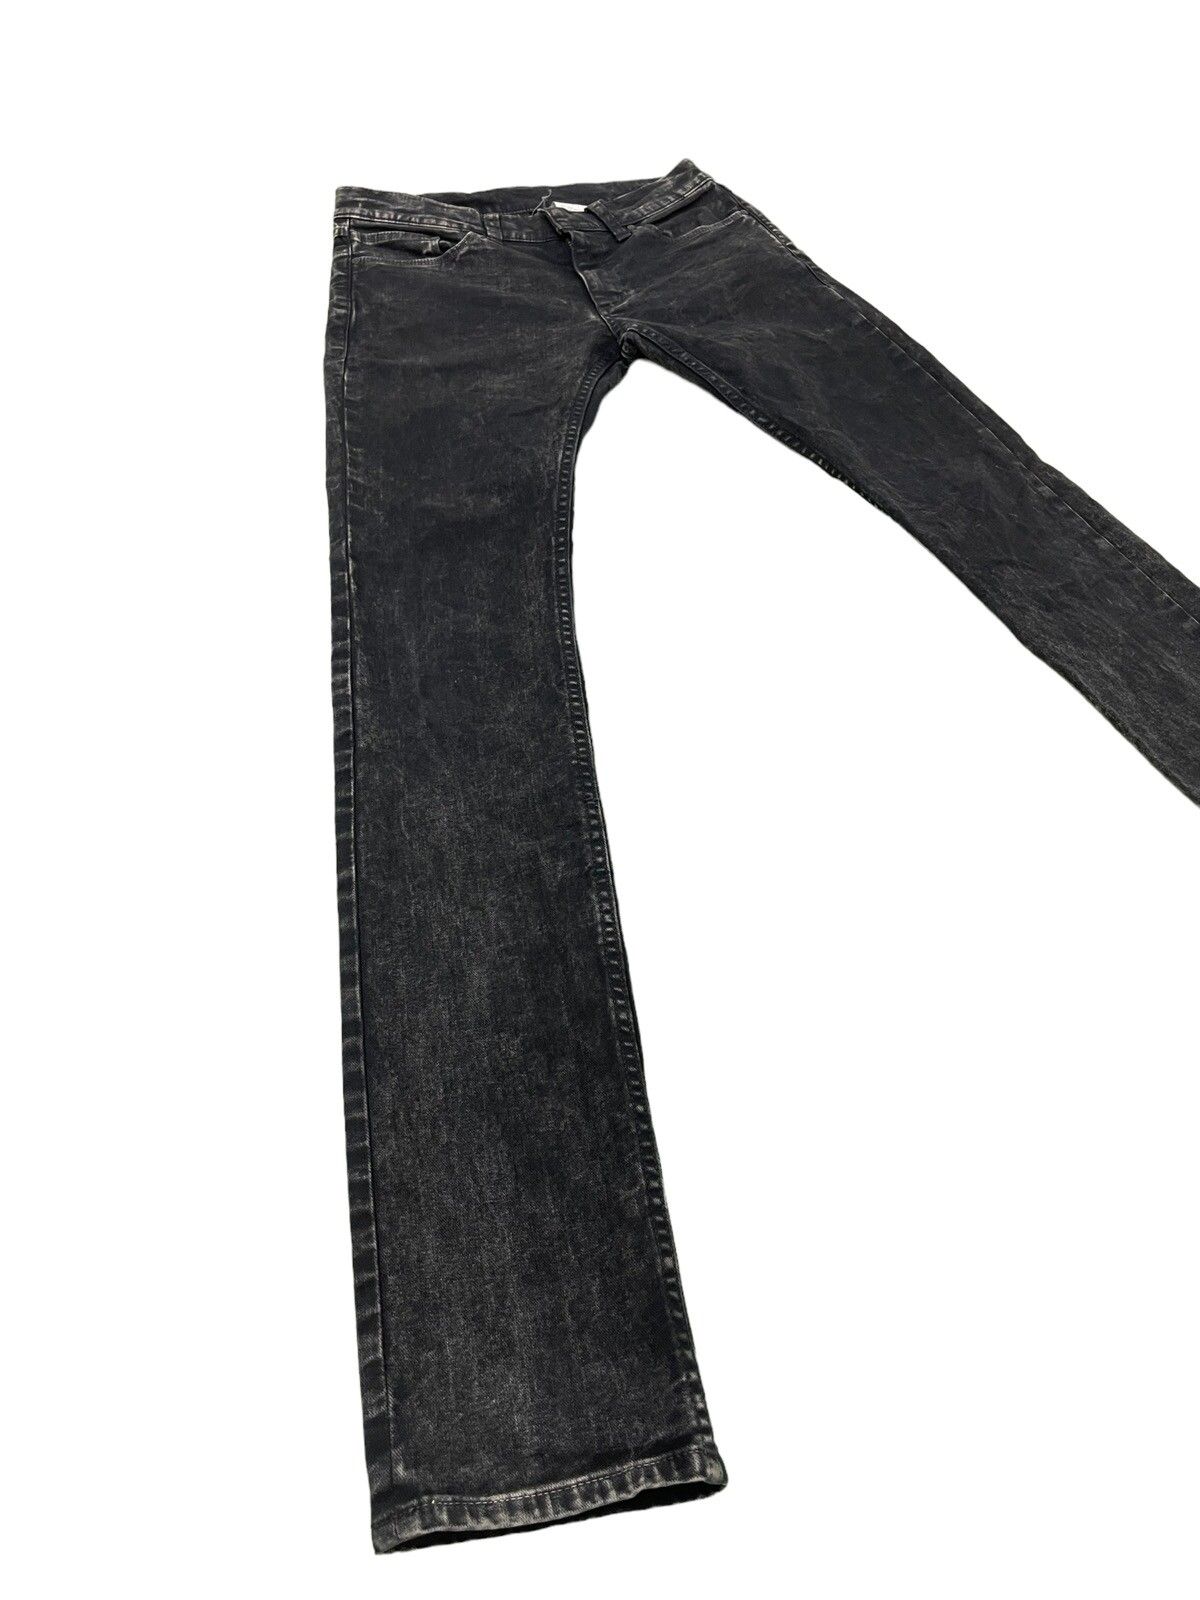 Hype Skinny Jeans Stretch Fadeless Japan Smoke Bleach Denim 2🟦8 | Grailed